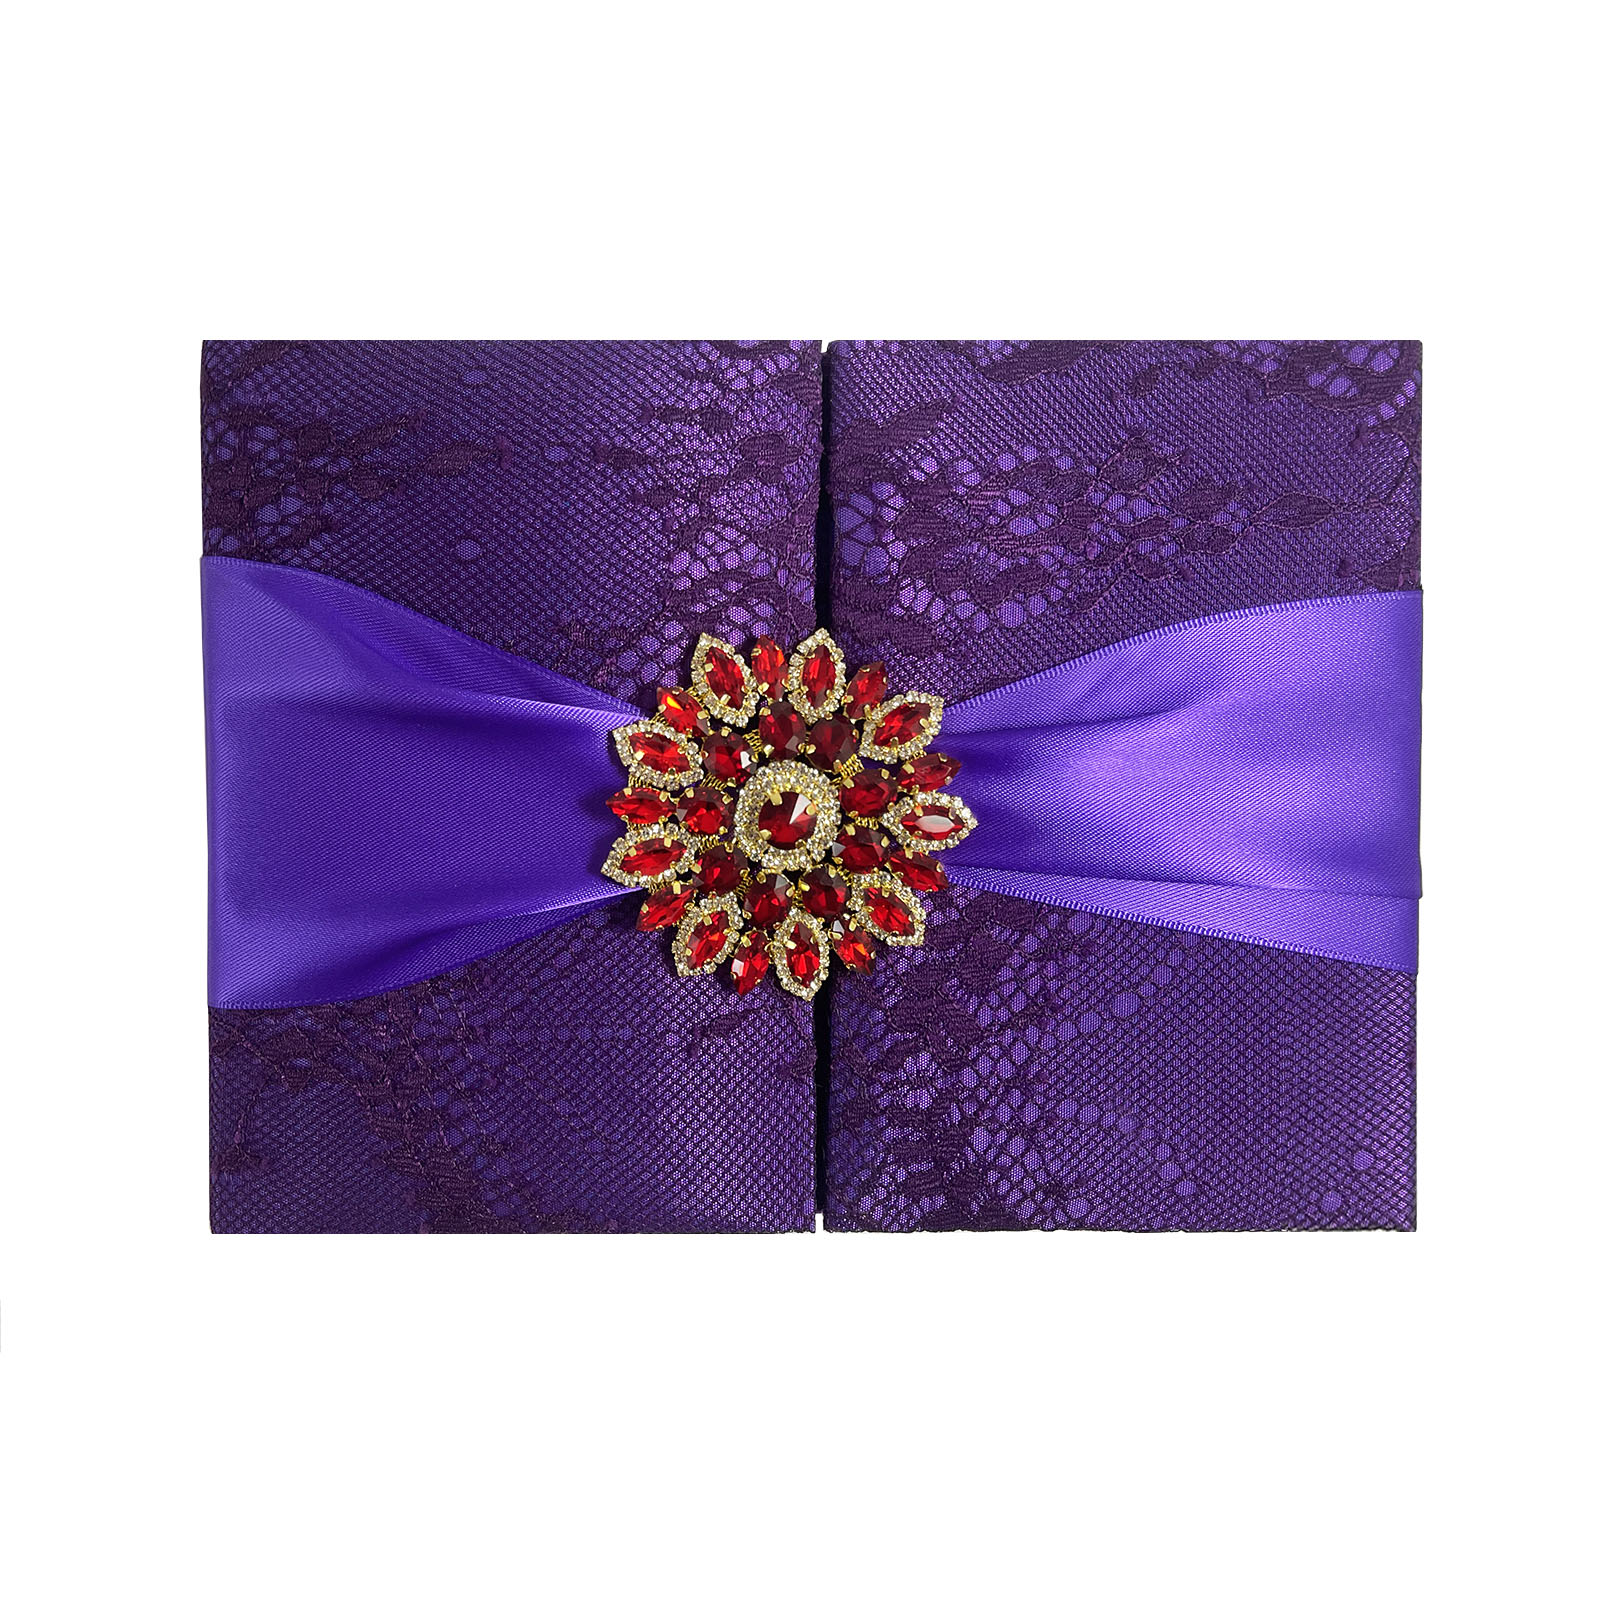 Purple lace invitation gatefold folio